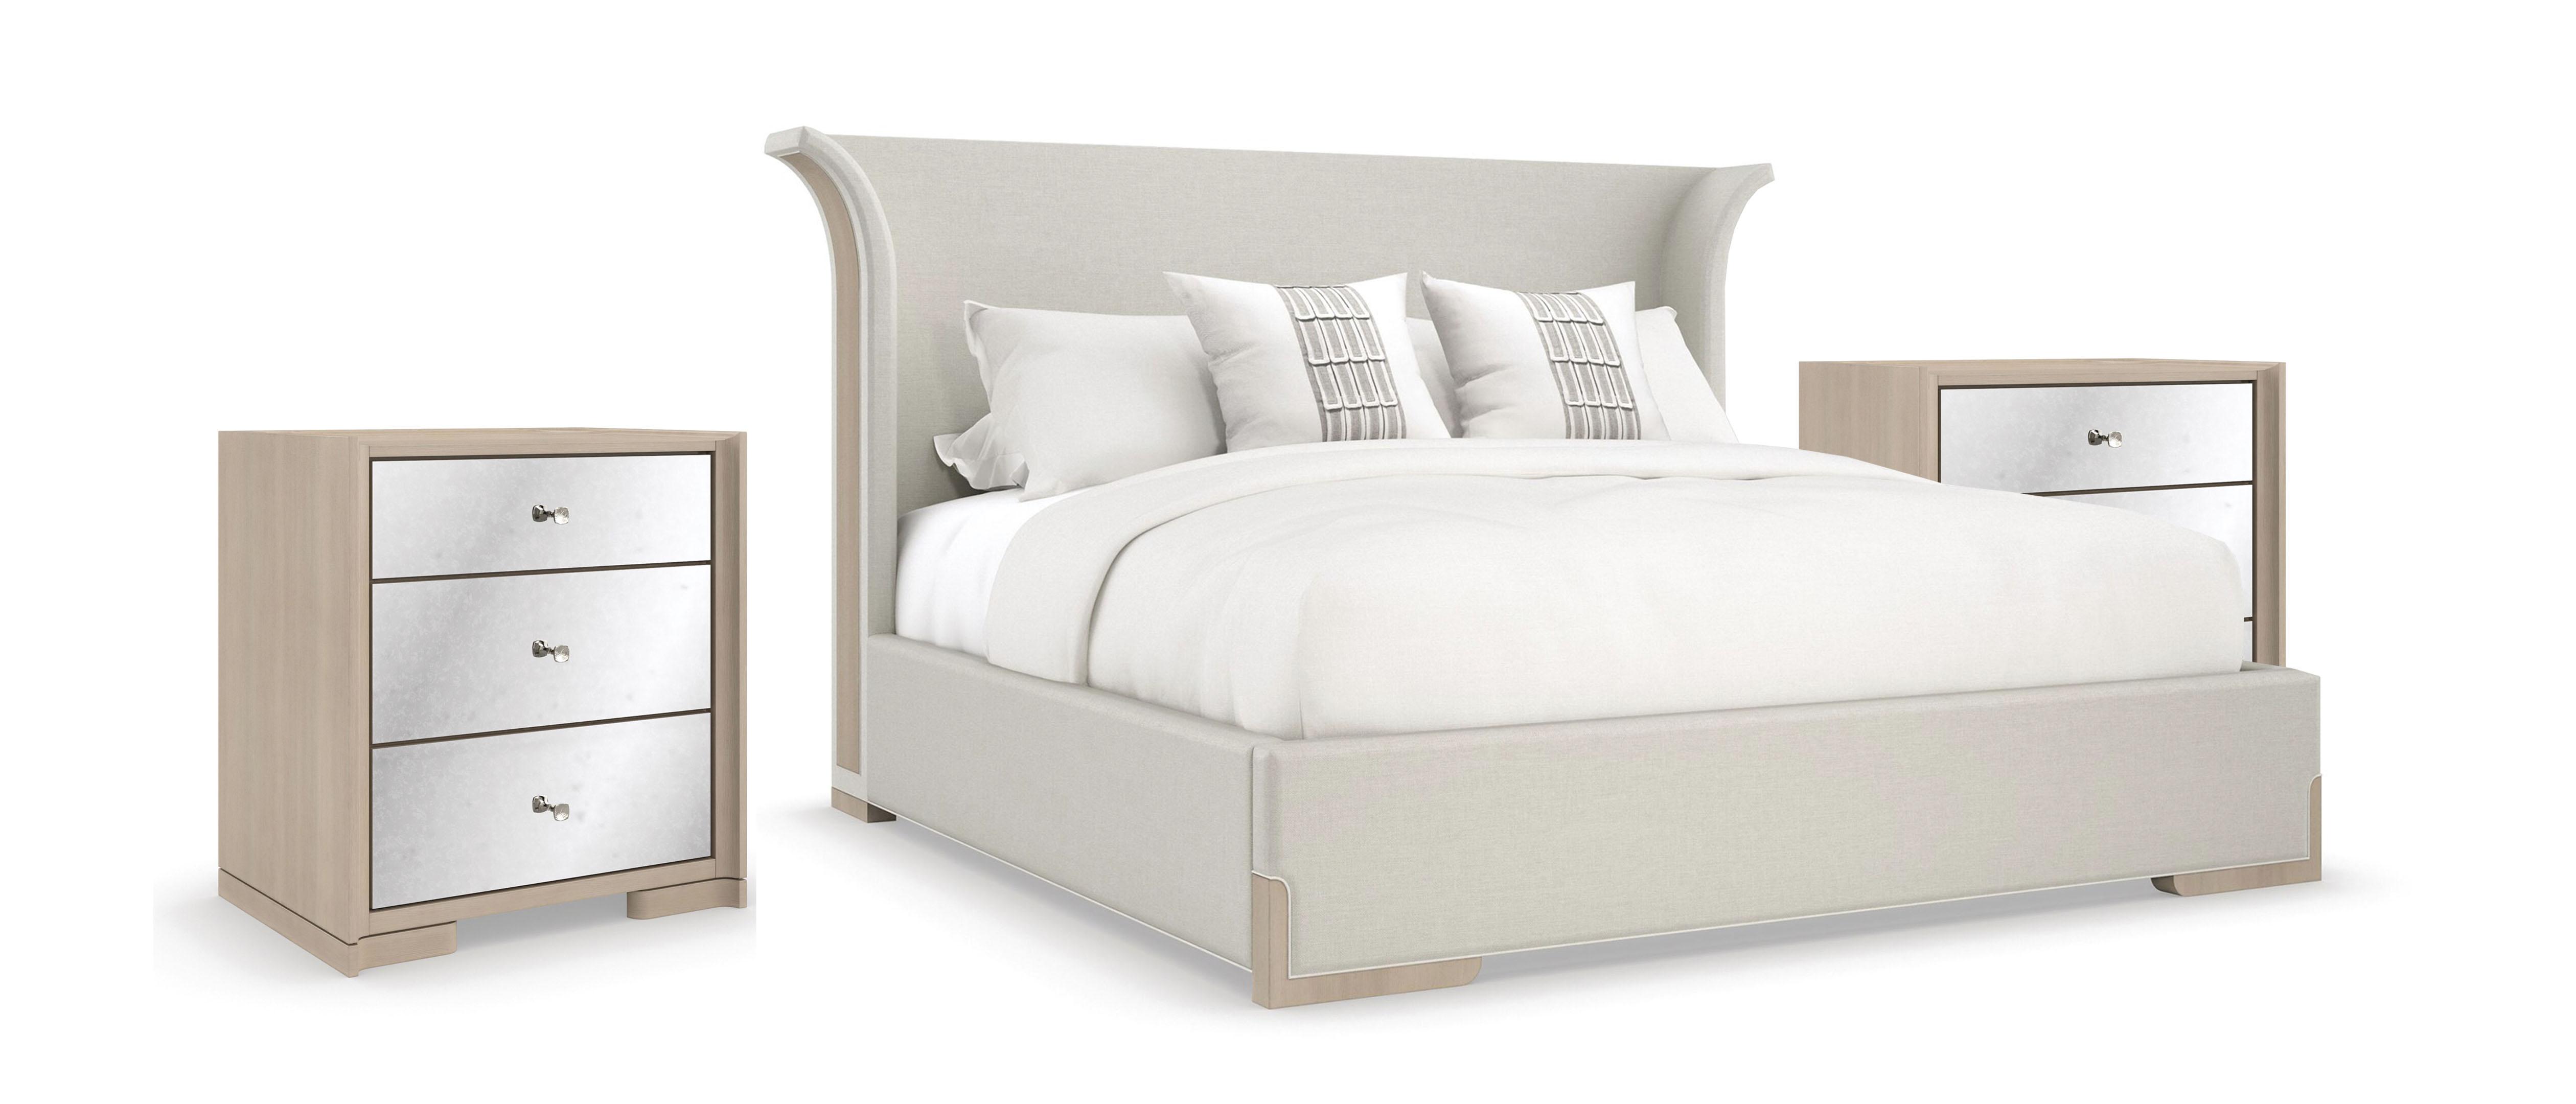 Contemporary Platform Bedroom Set BEAUTY SLEEP-KING / IN YOUR DREAMS CLA-021-122-Set-3 in Light Gray 